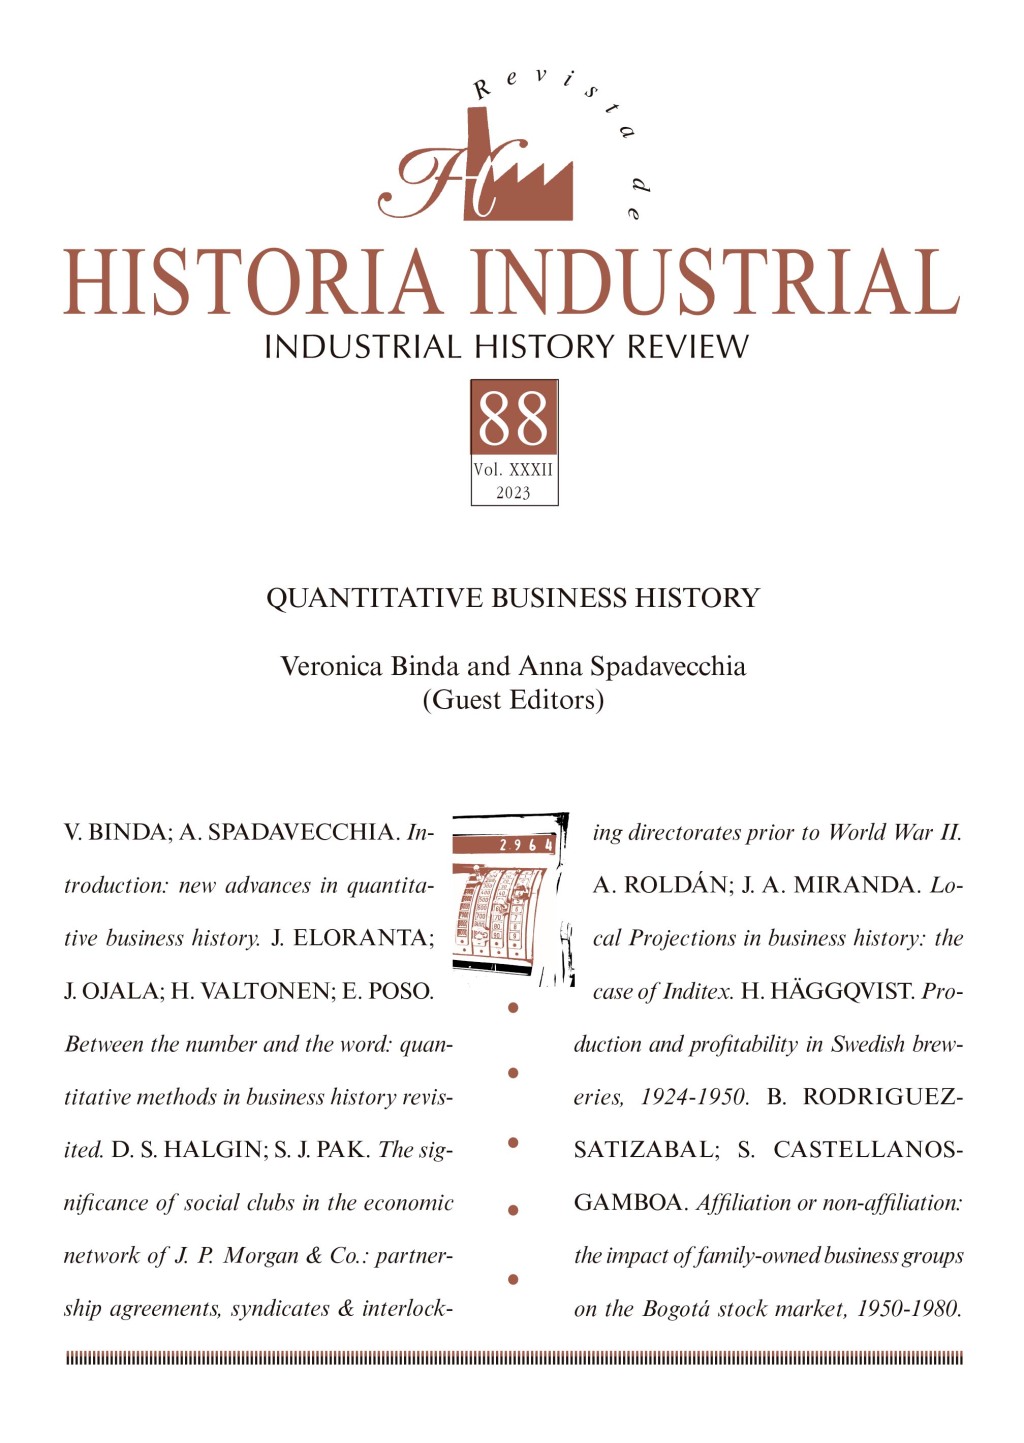 Letture: Quantitative Business History, by Veronica Binda and Anna Spadavecchia (Guest Editors), Revista de Historia Industrial-Industrial History Review, Special Issue Vol. 32 No. 88 (2023)